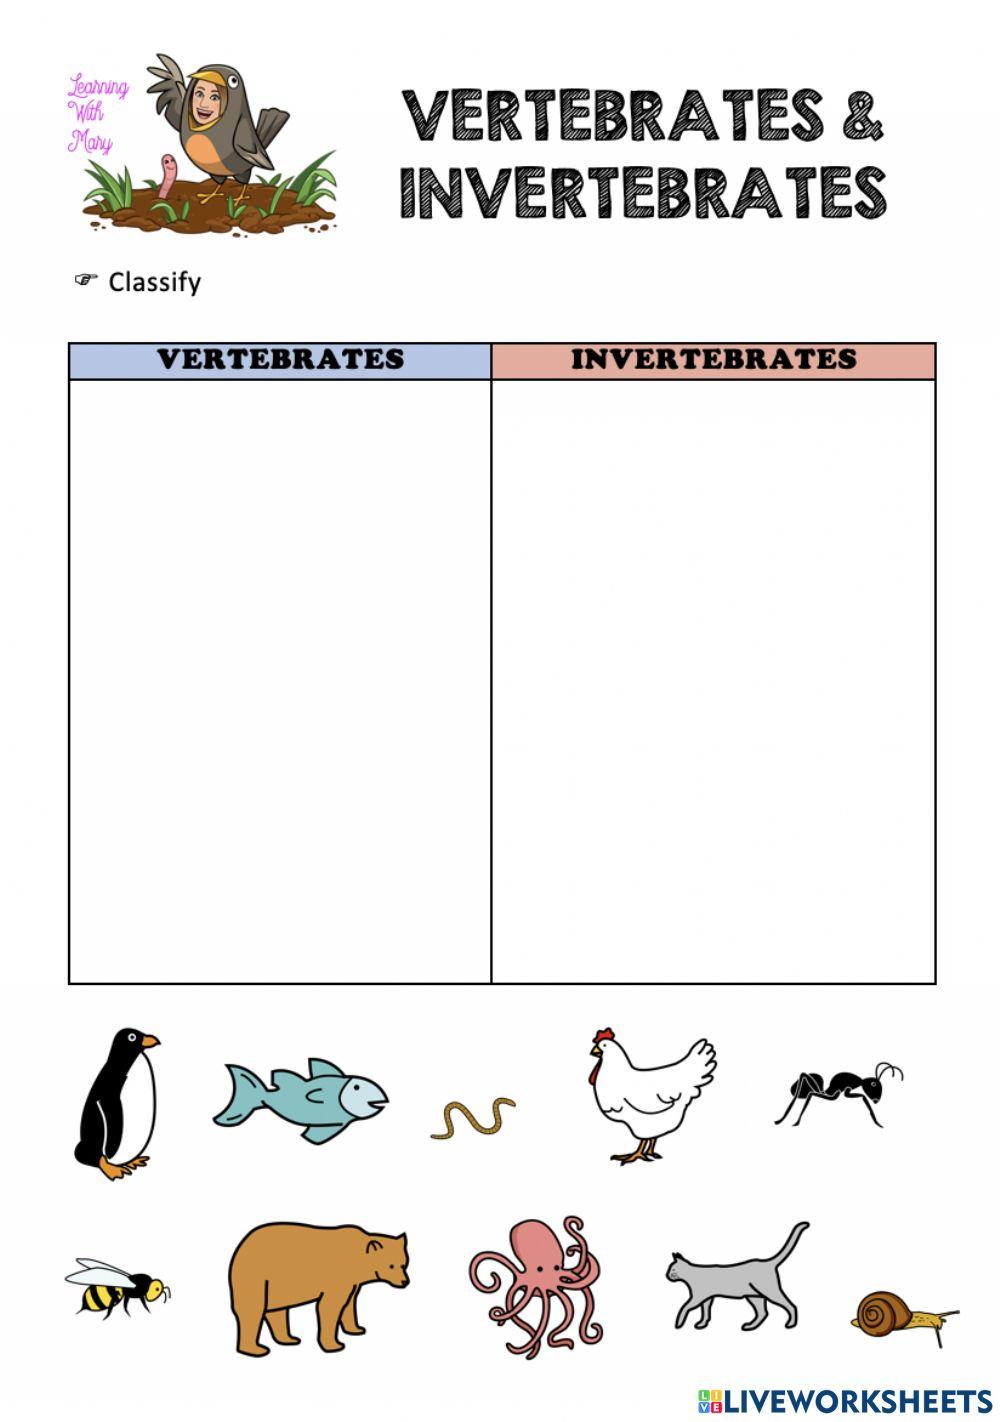 Vertebrates or invertebrates